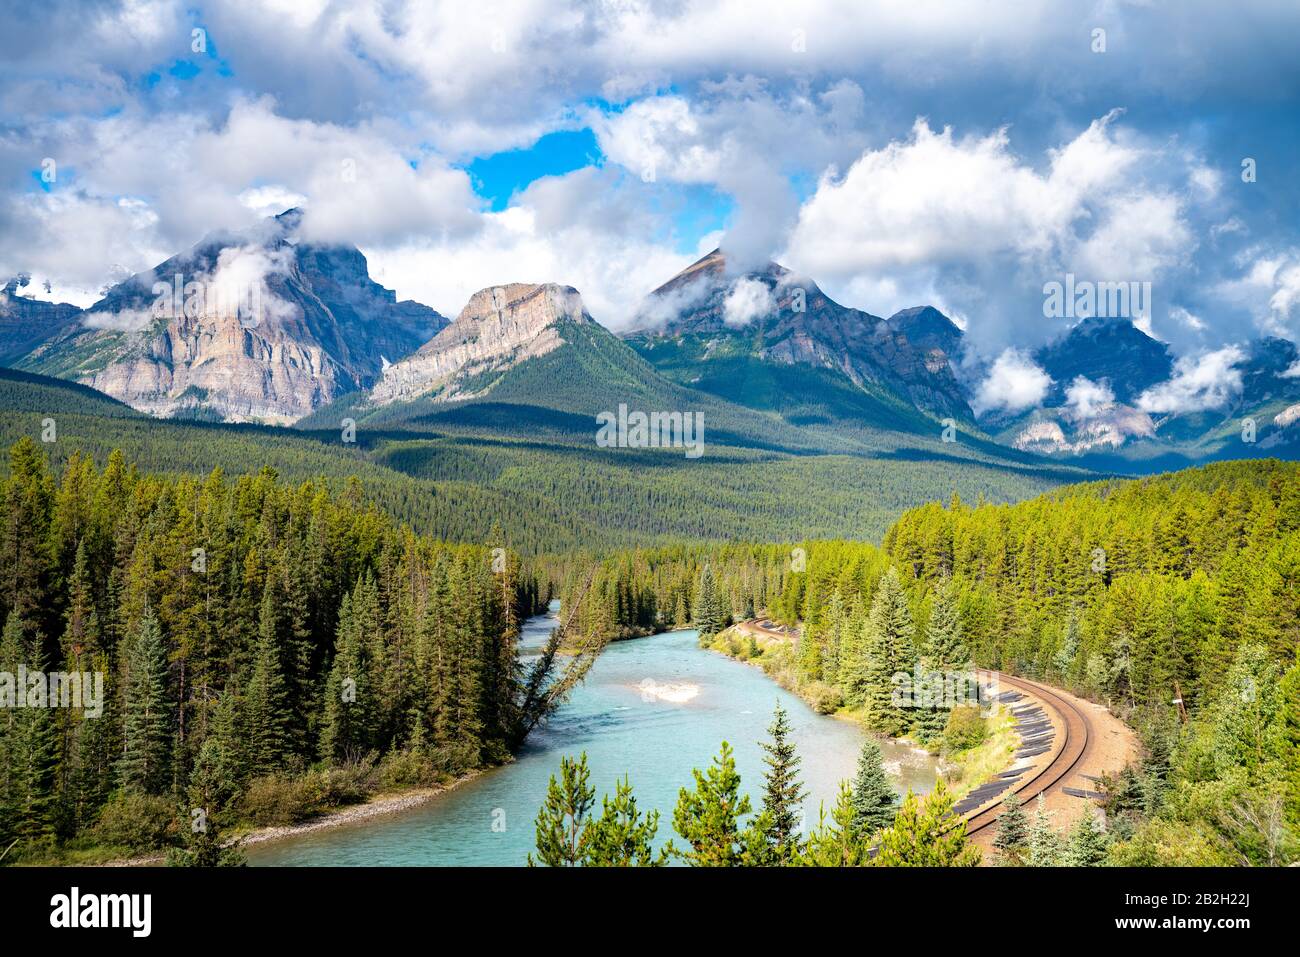 Curva de Morant, paisaje famoso con ferrocarril. Banff National Park, Canadá Foto de stock